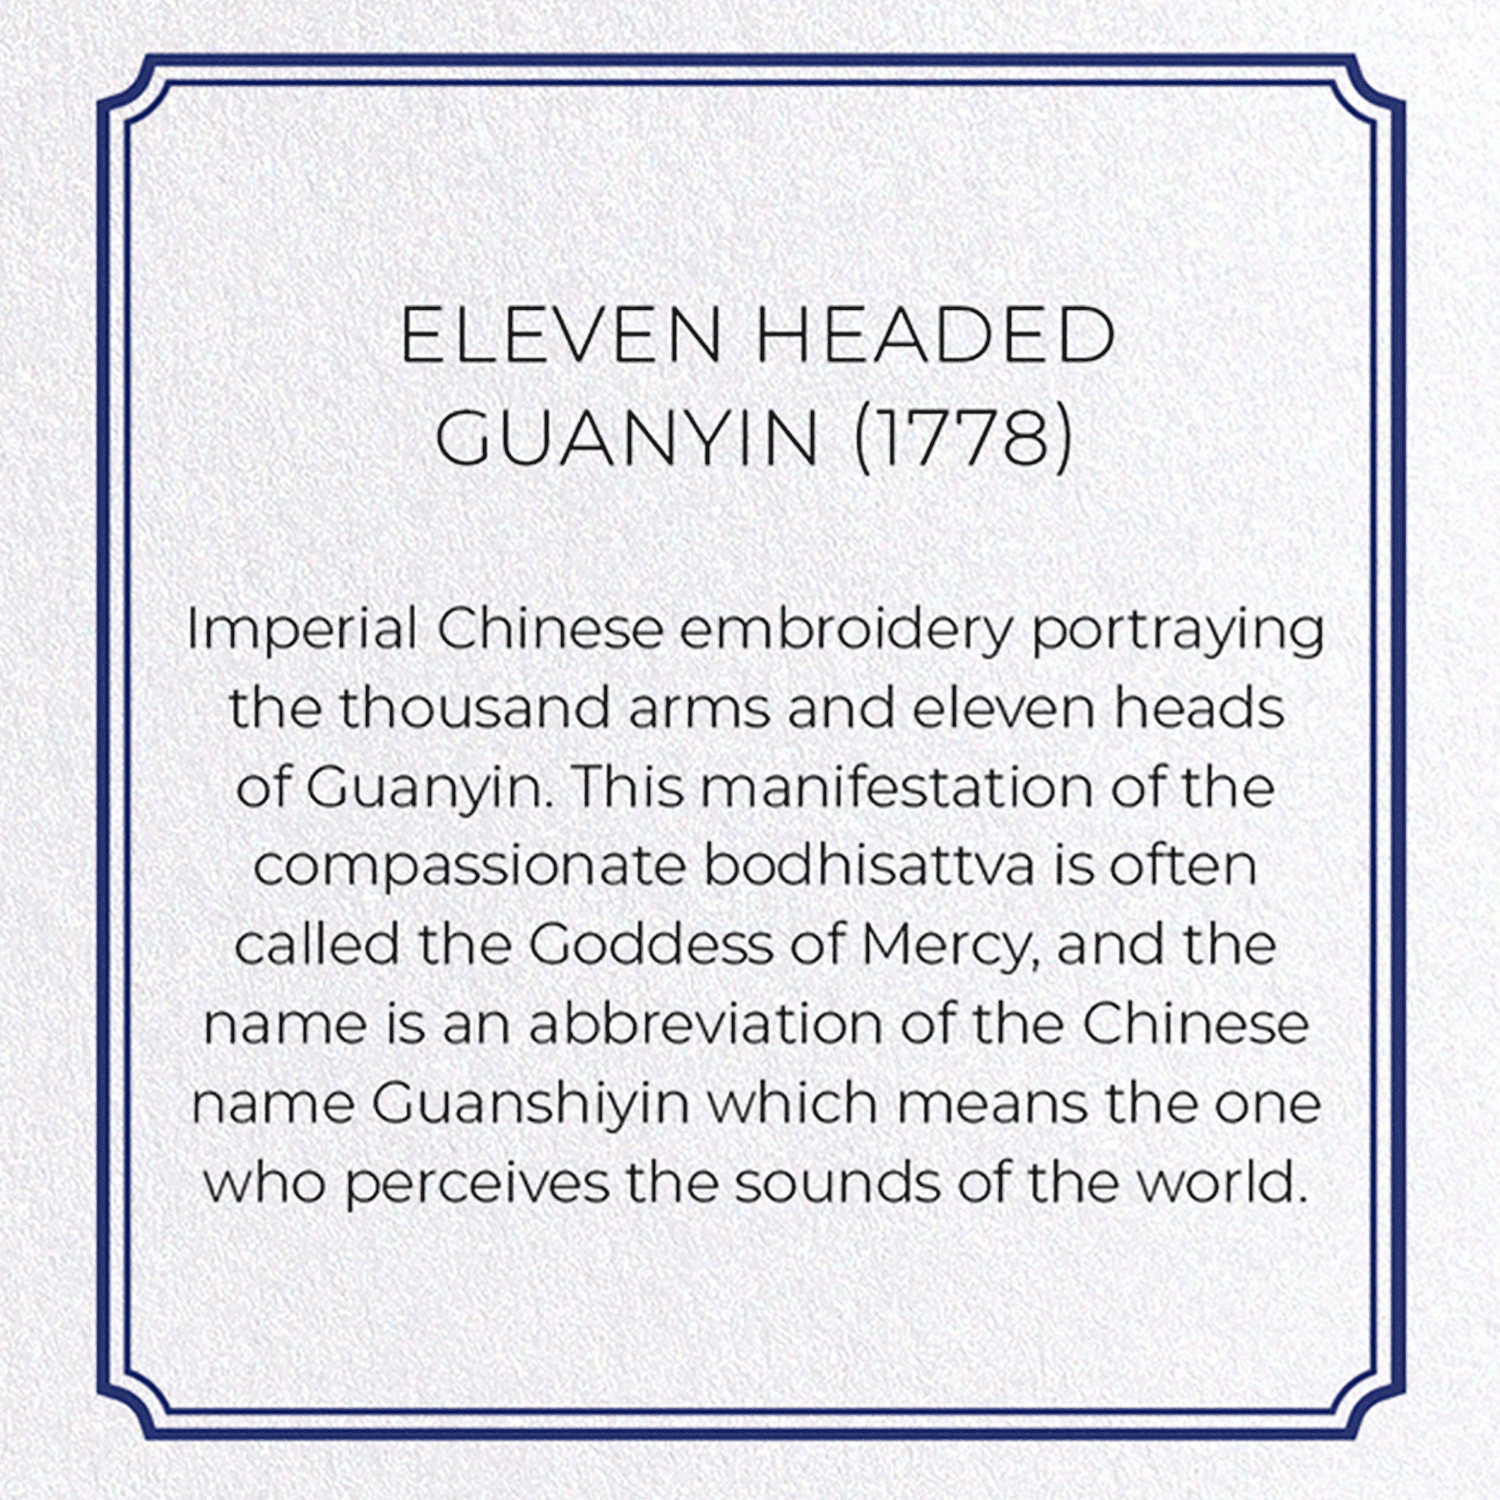 ELEVEN HEADED GUANYIN (1778)